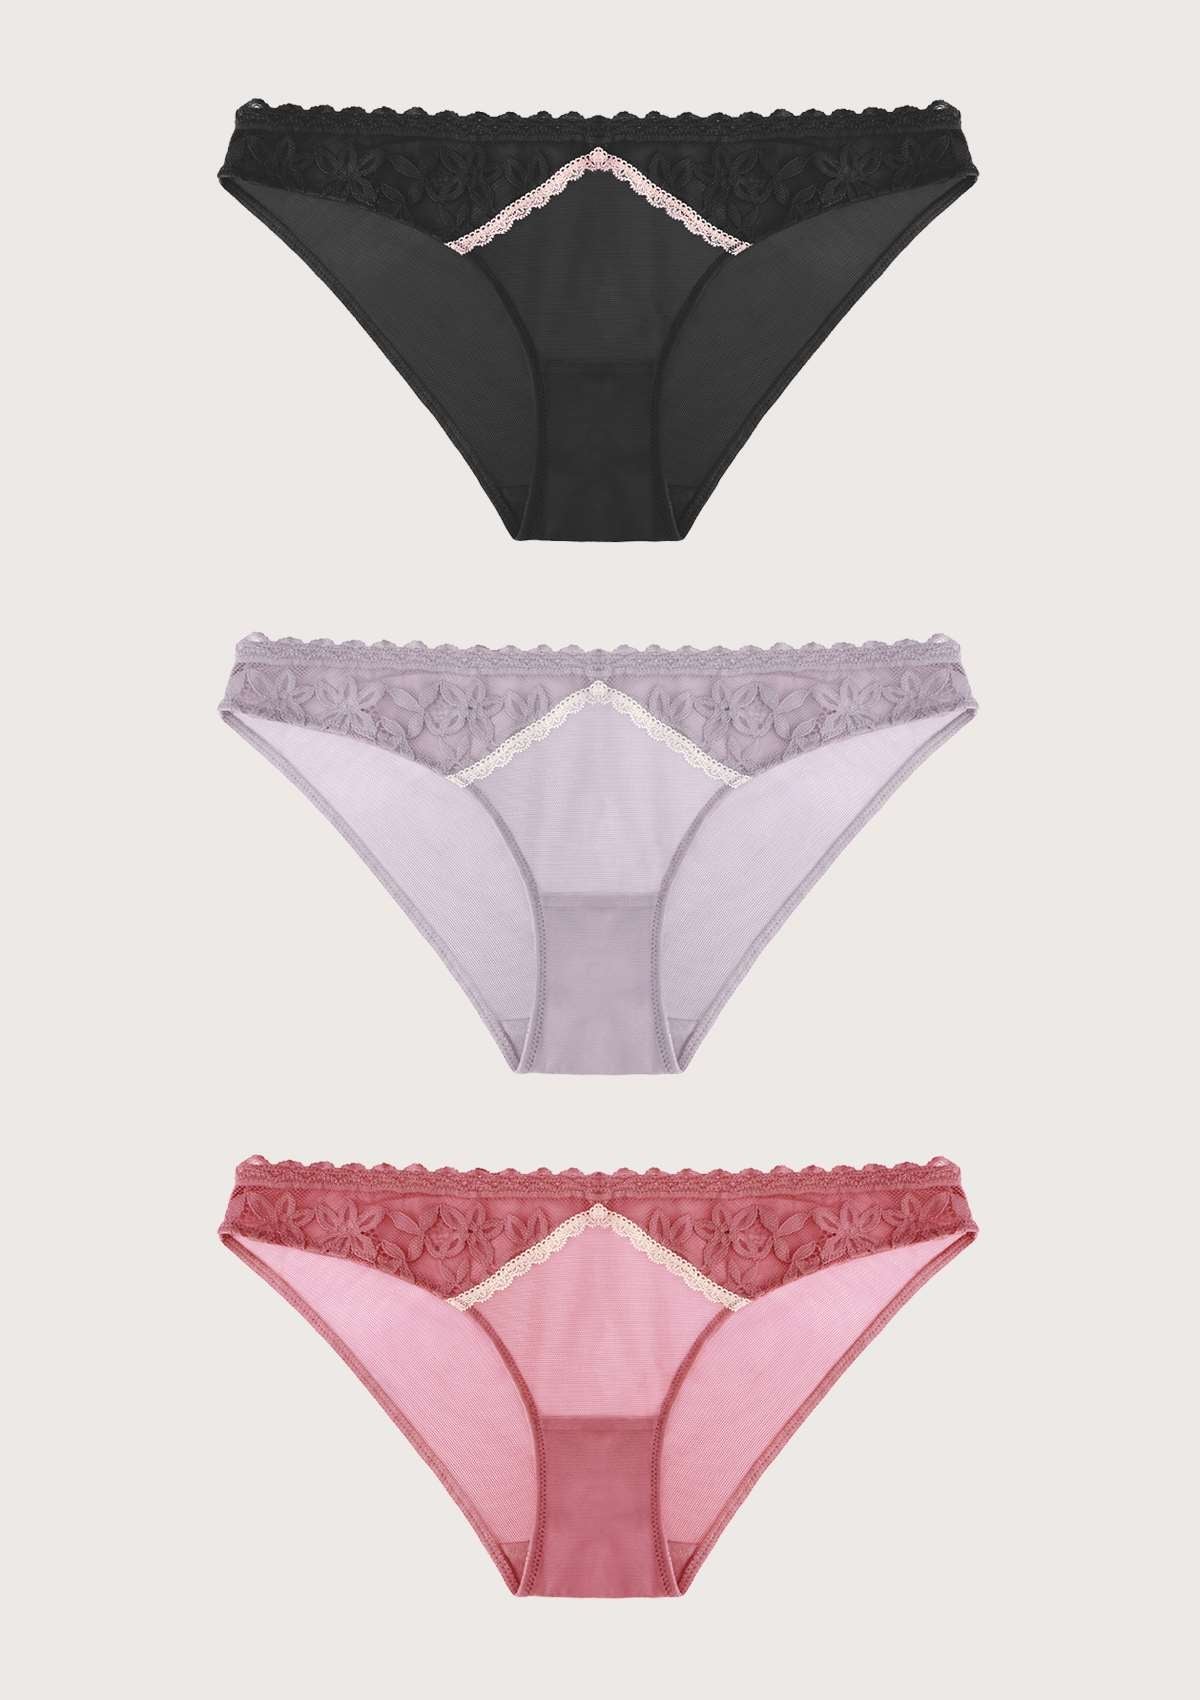 HSIA Contrast Color Bikini Panties 3 Pack - L / Black+Purple+Pink